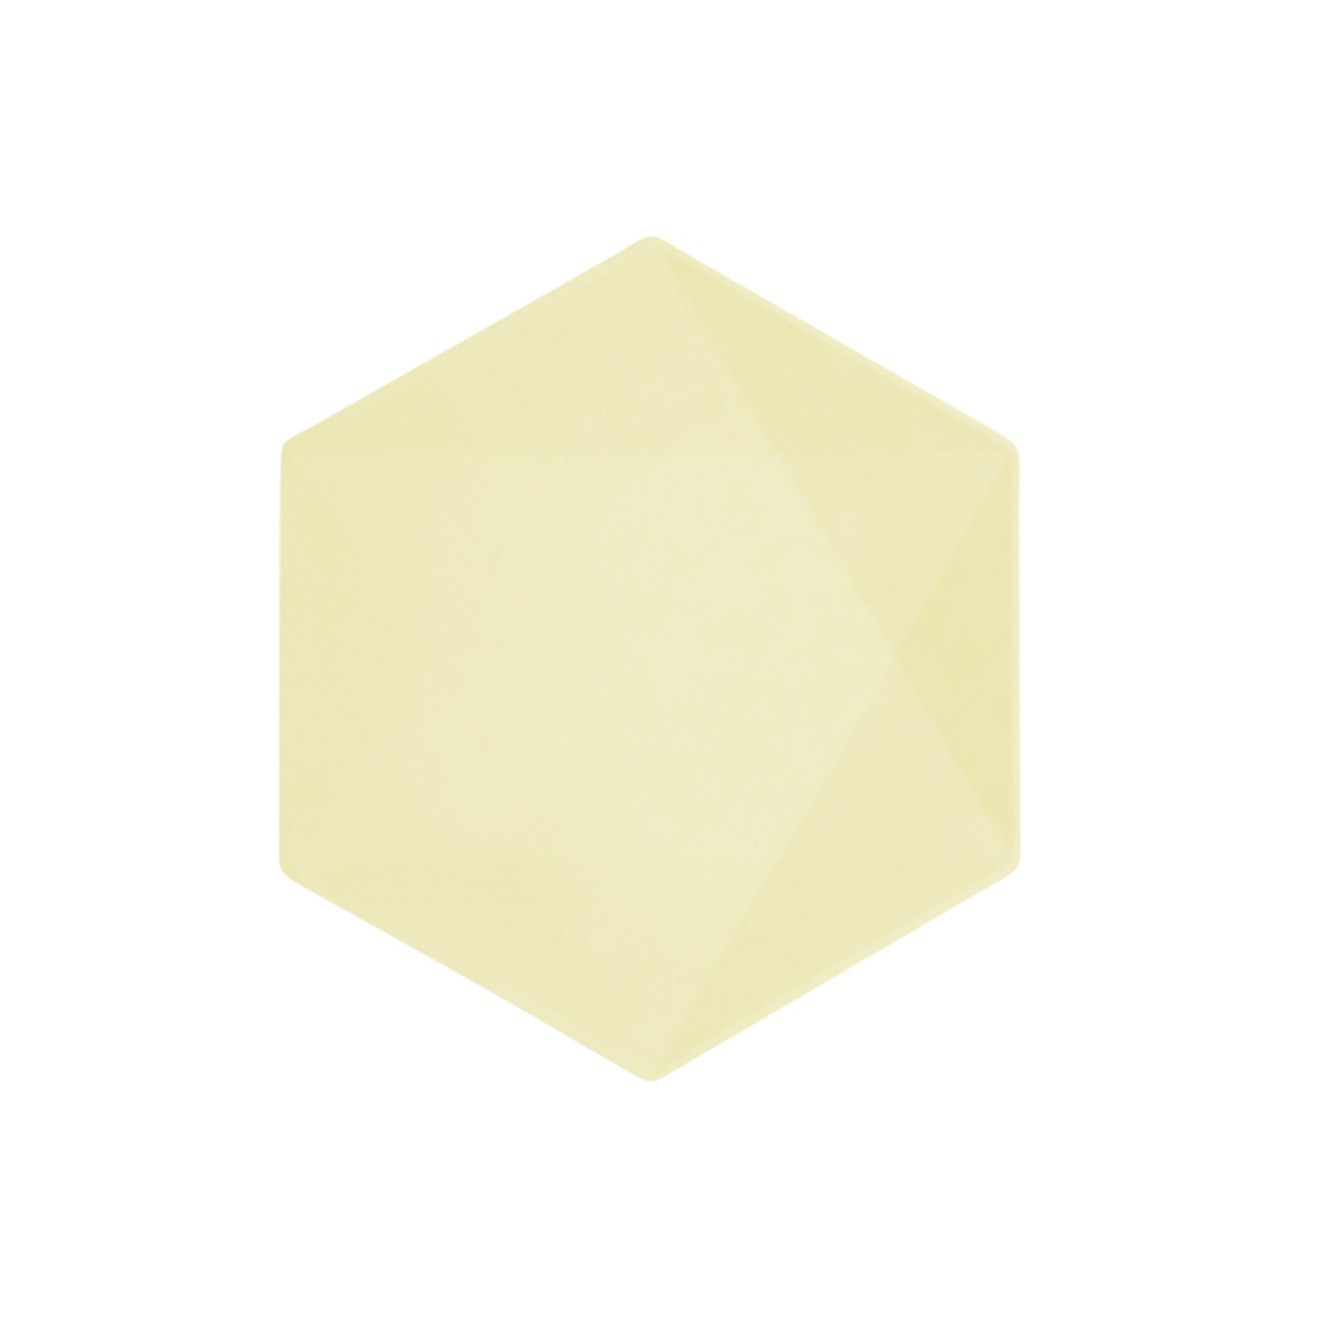 6 Partyteller - Hexagonal - gelb